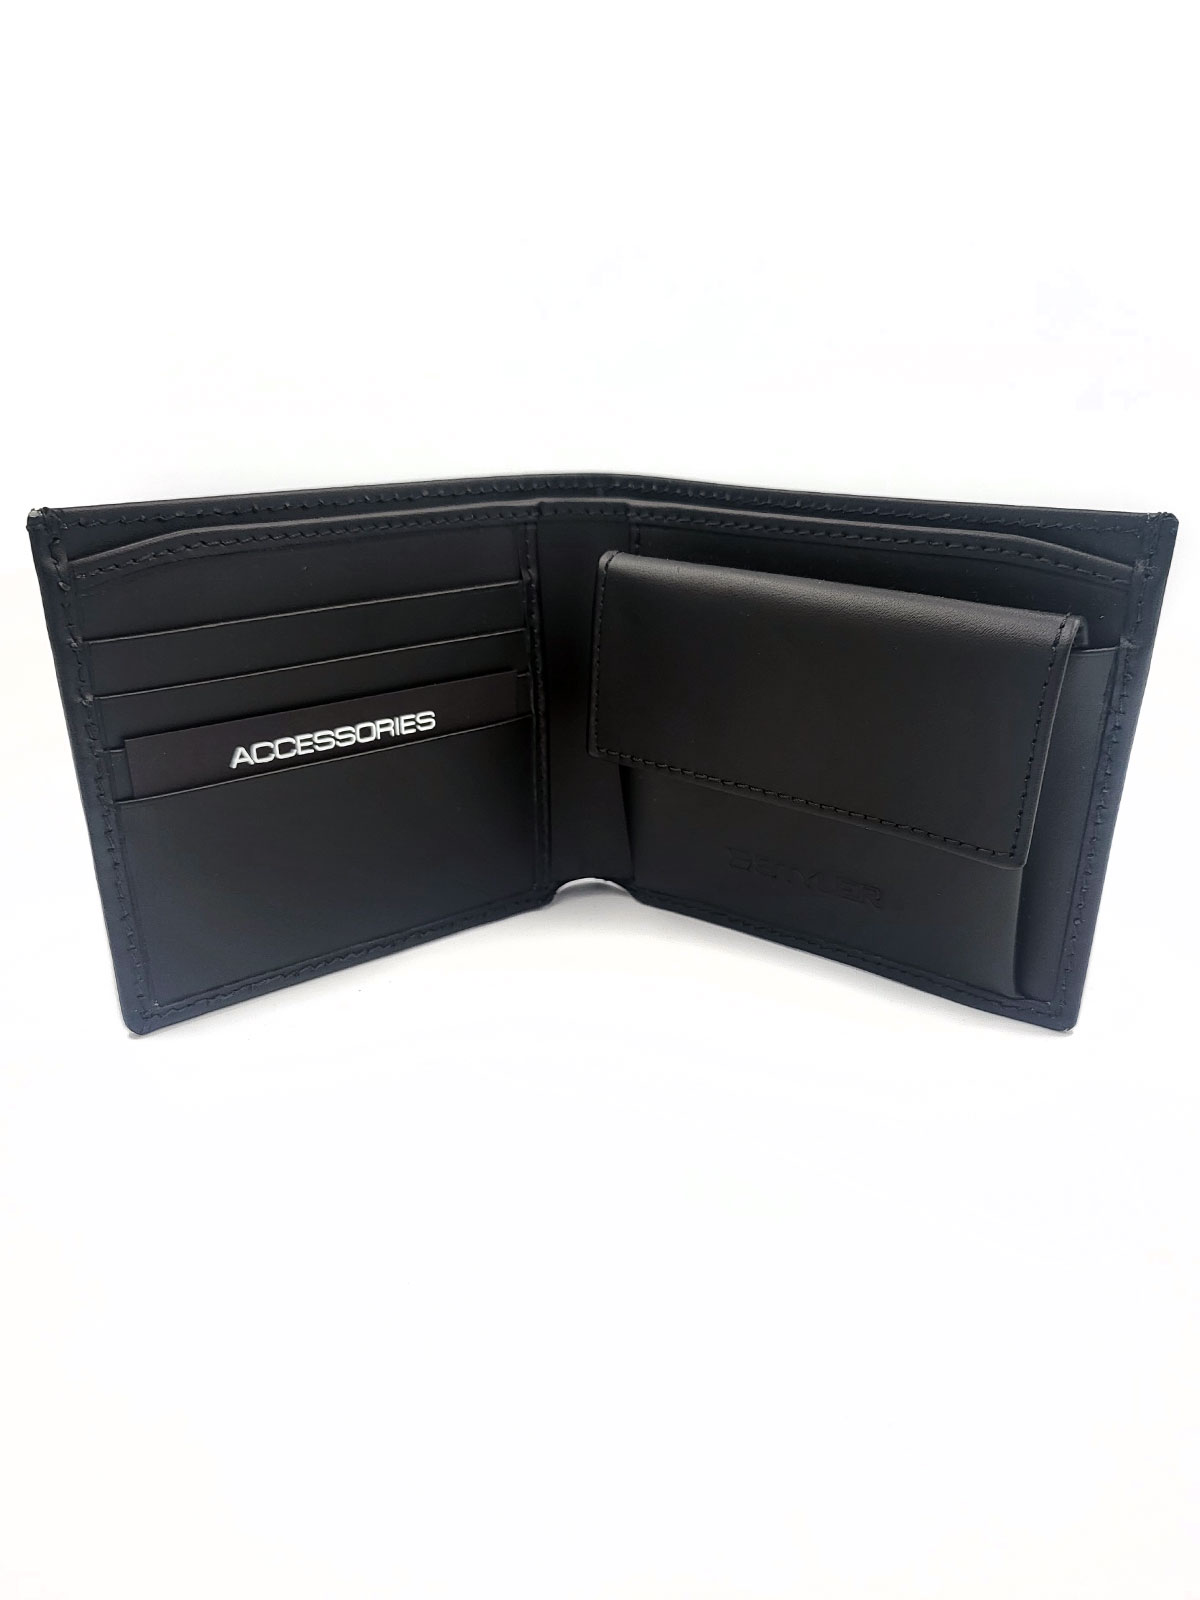 Black classic wallet - 10850 - € 33.18 img2